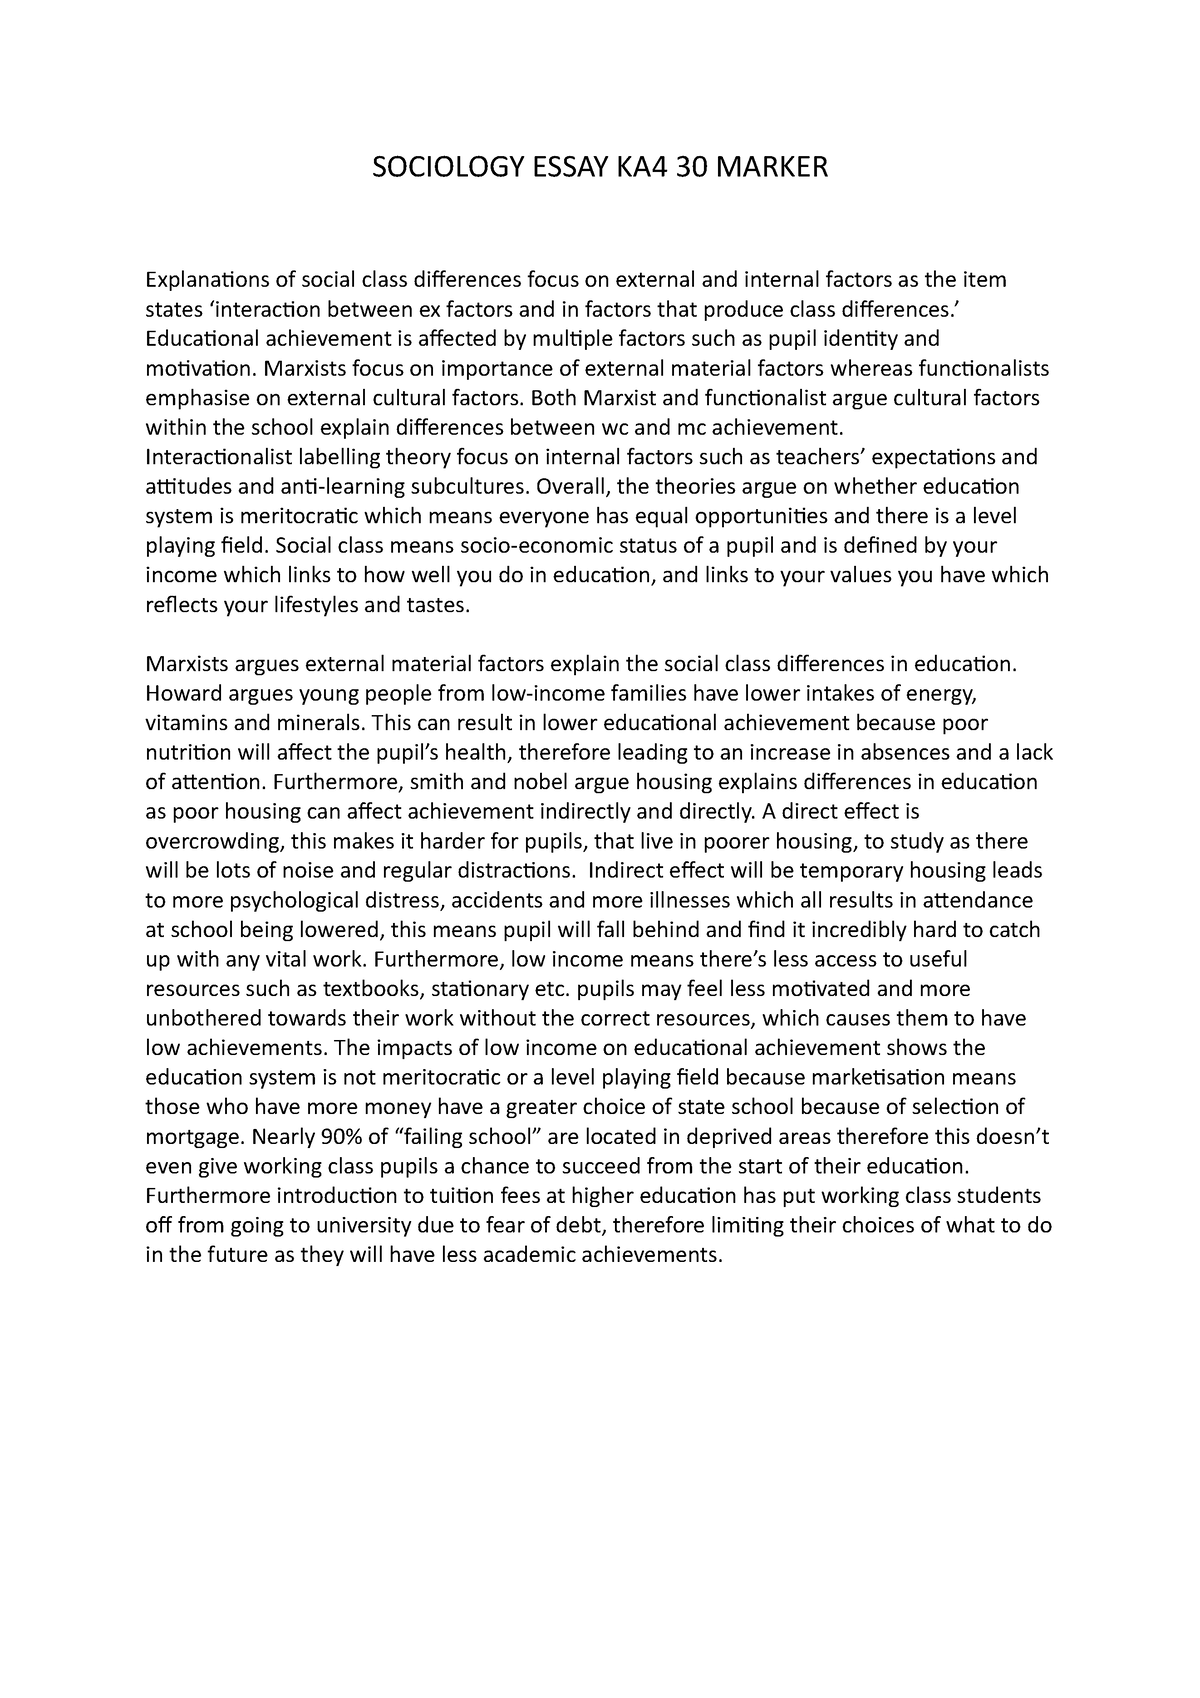 sociology essay pdf